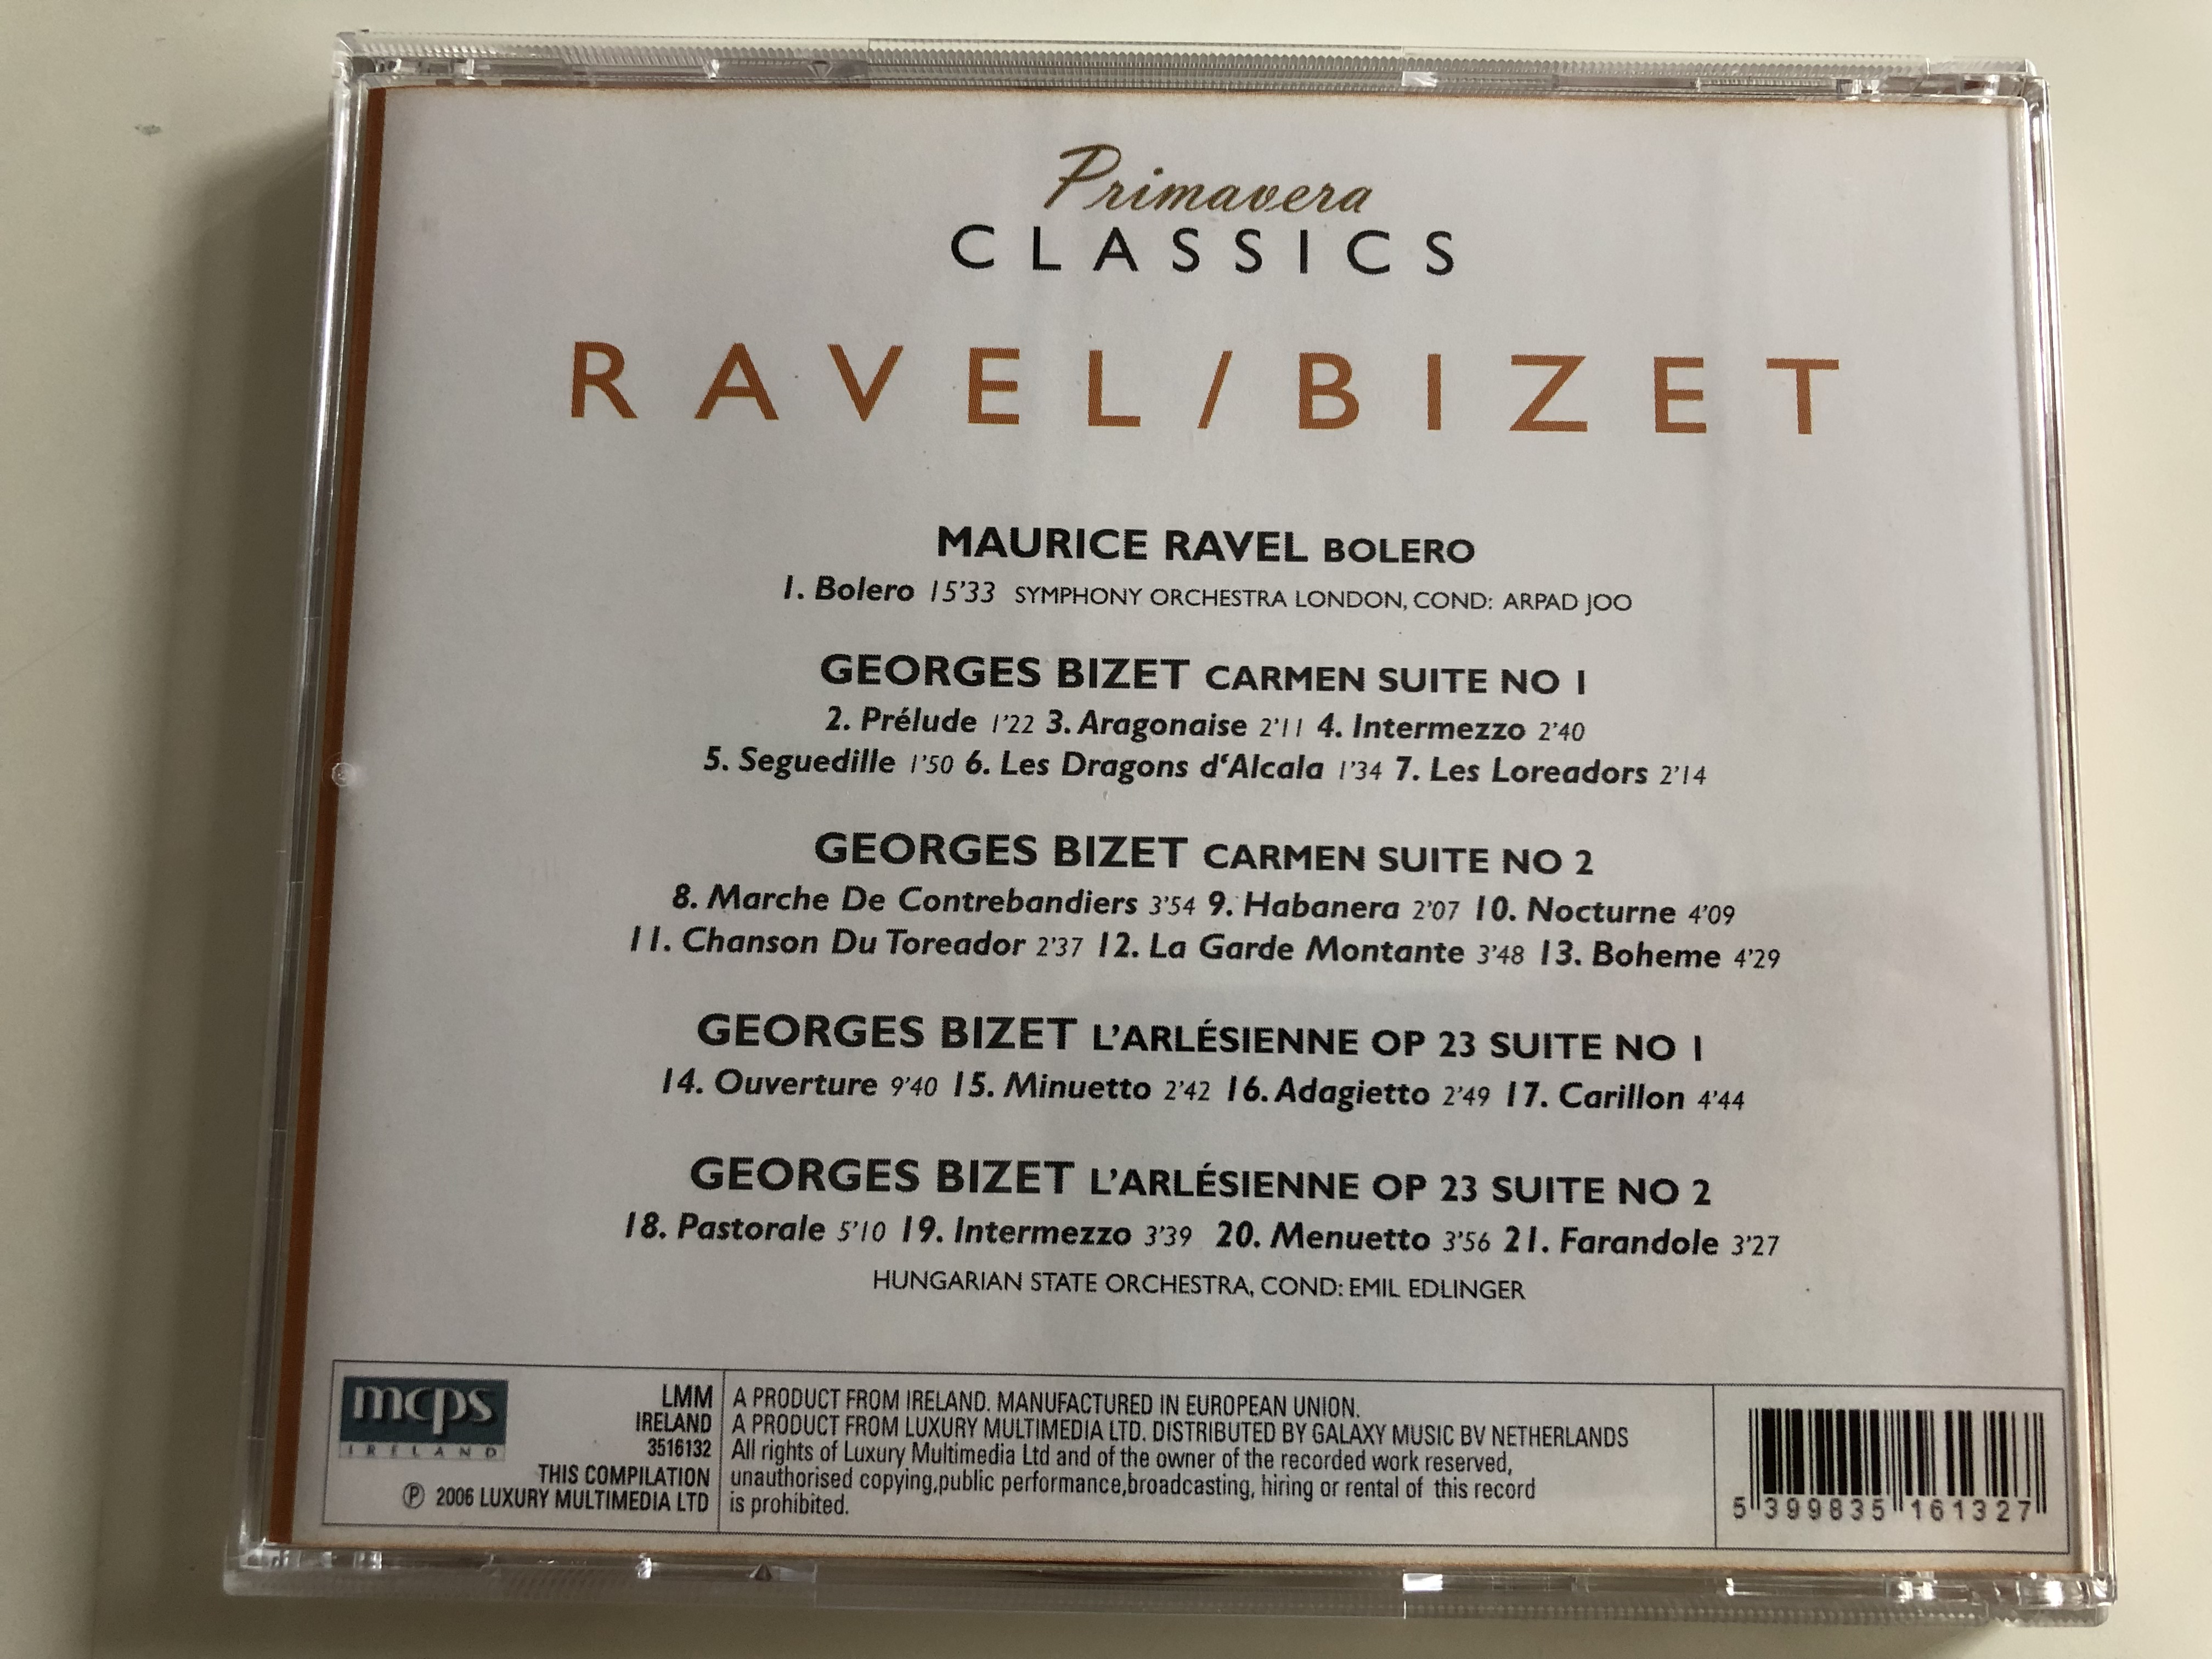 ravelbizet-bolero-carmen-l-arlesienne-suites-hungarian-state-orchestra-conducted-emil-edlinger-primavera-classics-audio-cd-3516132-4-.jpg